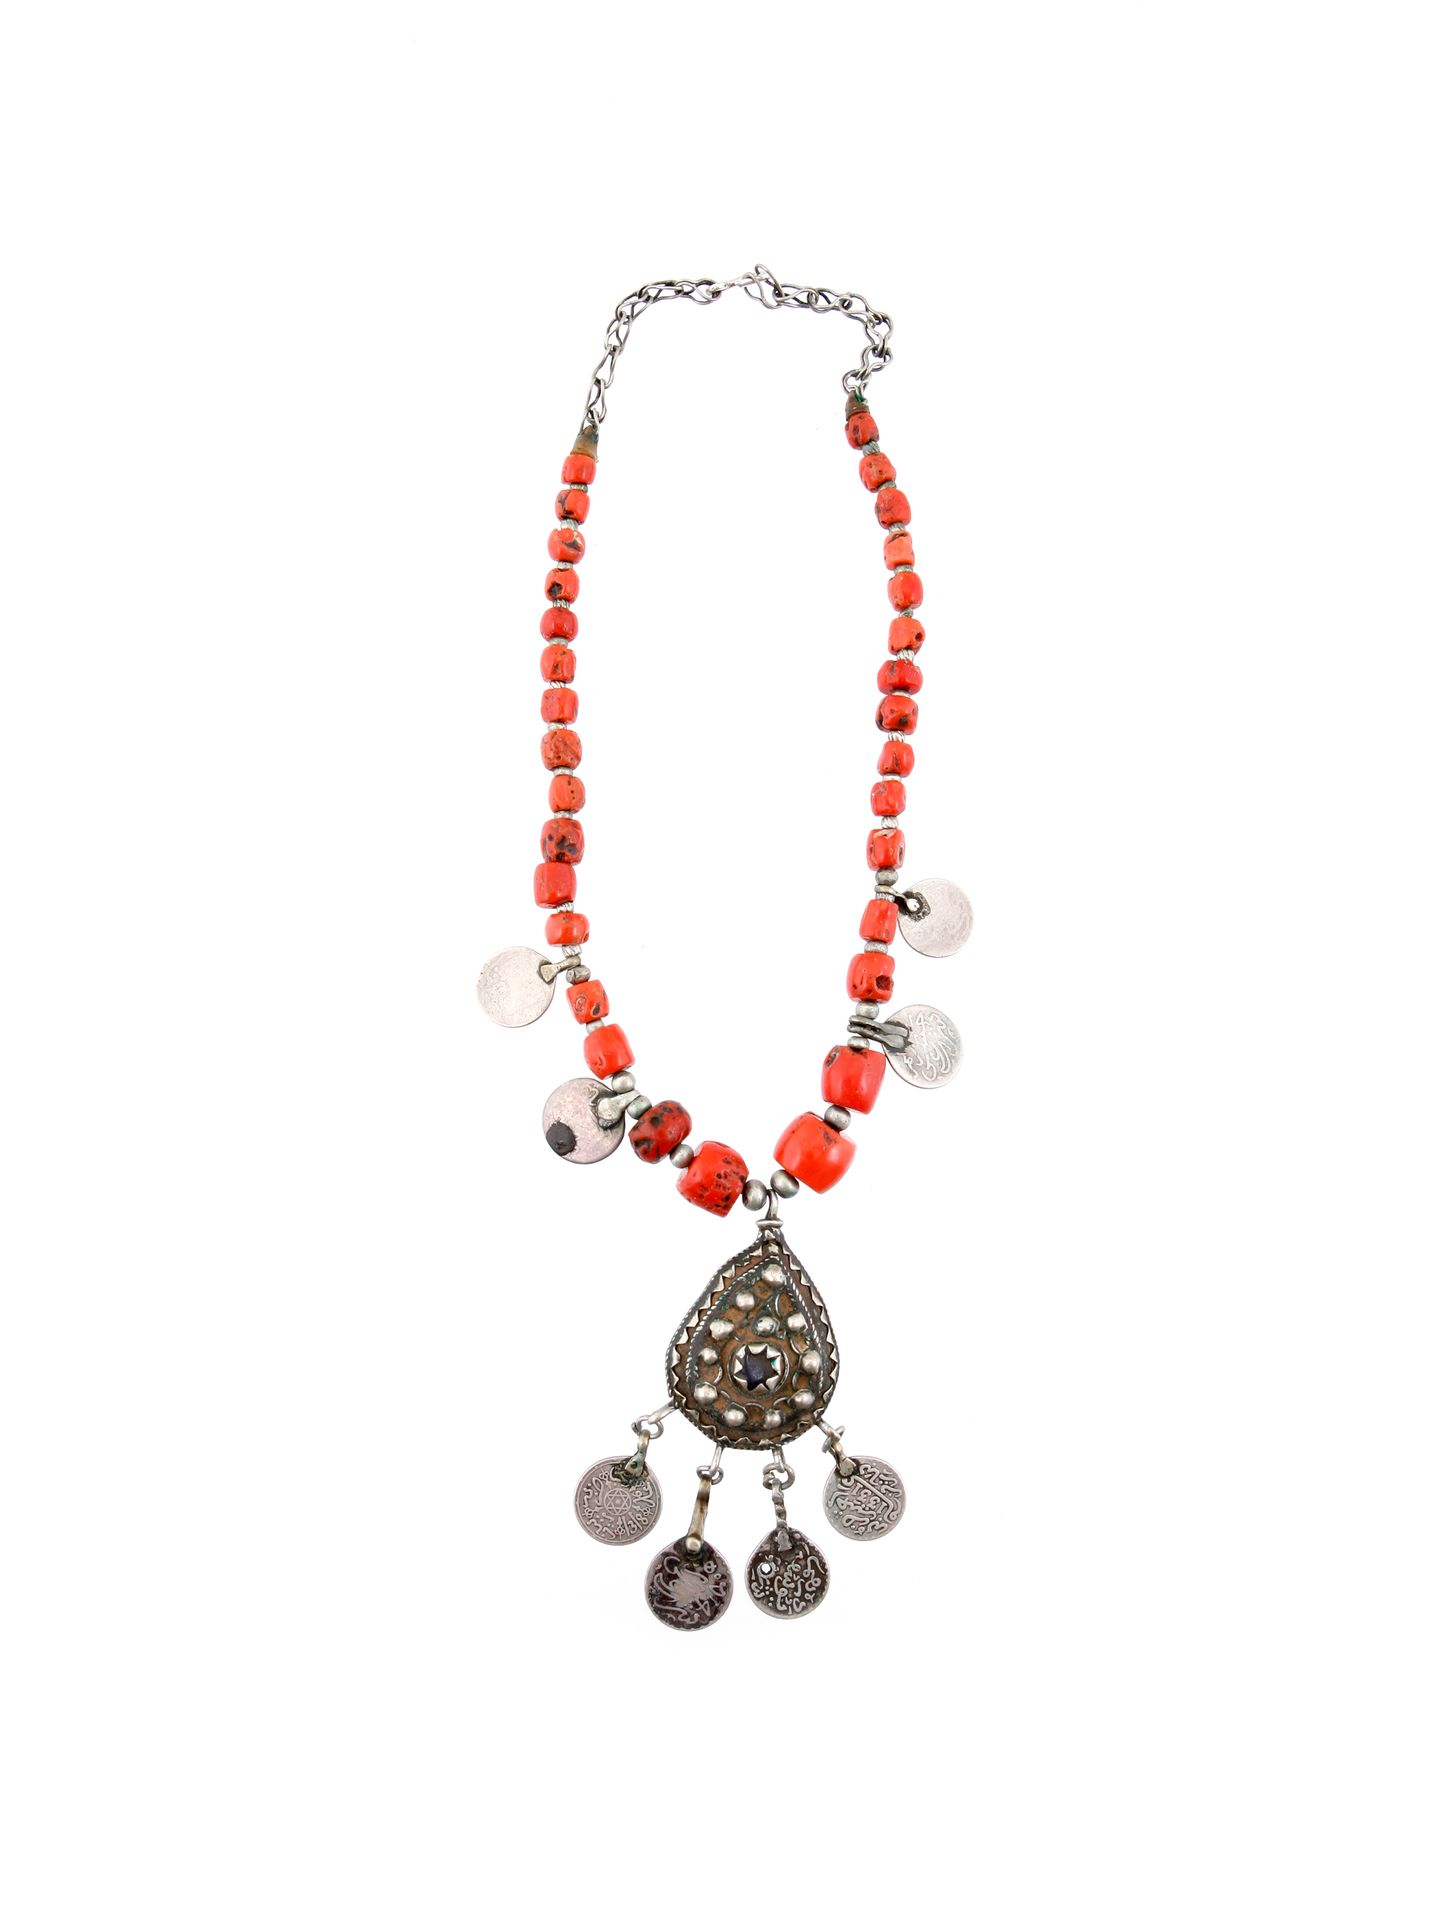 A Berber Necklace with five Pendants Collier mit 5 Schmuck-Anhänger

Berber, Sah&hellip;